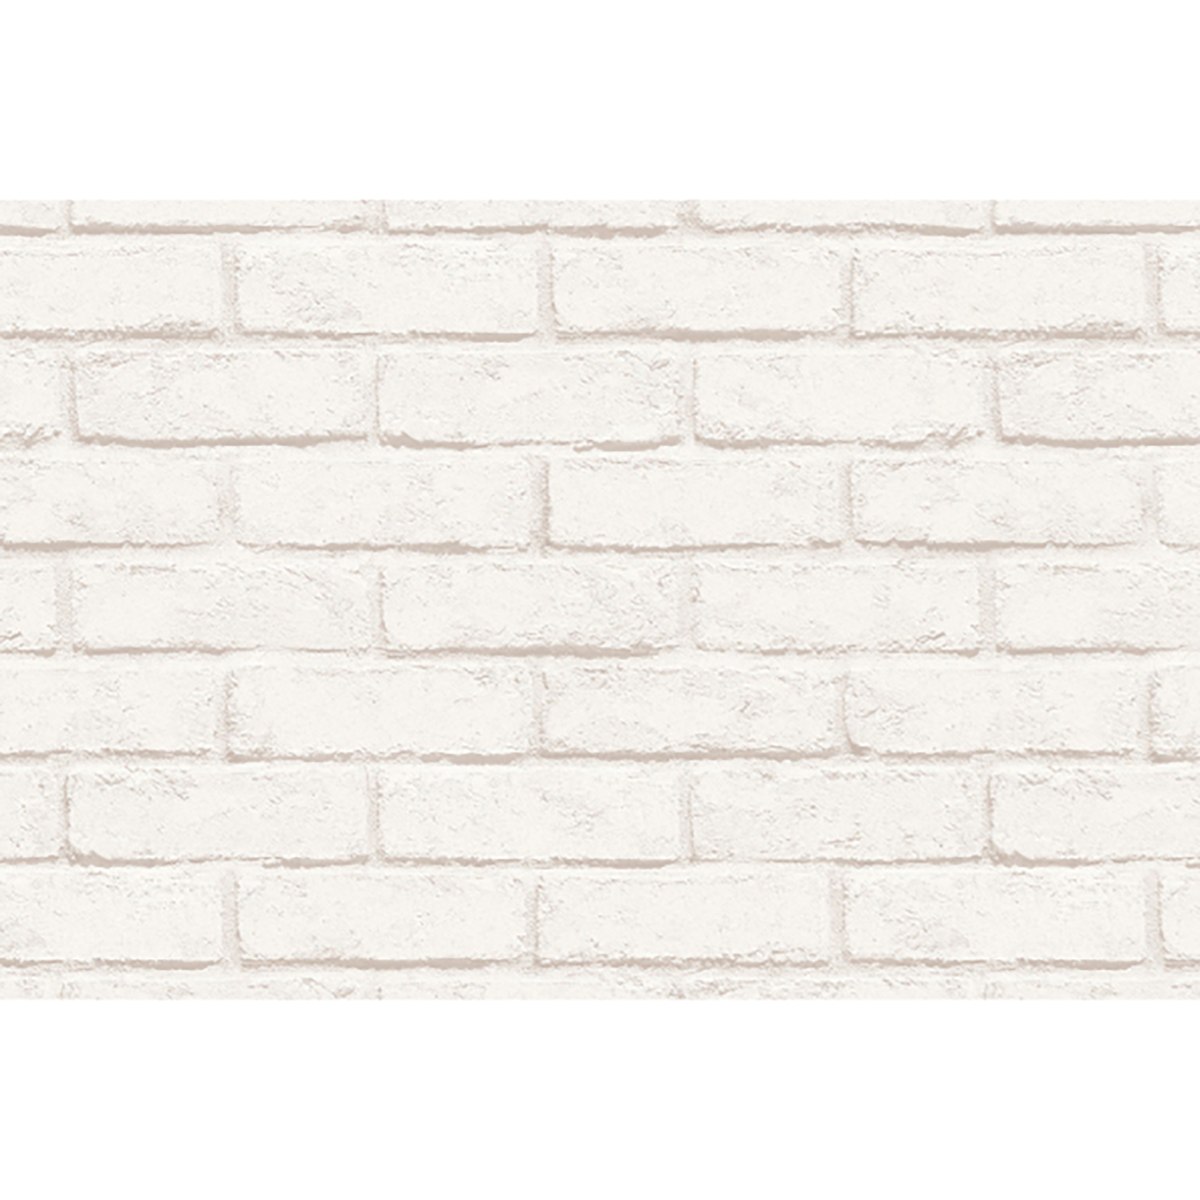 Kate 白いレンガの背景布 ジアテンツーkate 3x3m 白い灰色レンガ壁 背景布 灰色 床 写真背景 撮影用 背景 布 カスタマイズ可能背景 Abracce Com Br